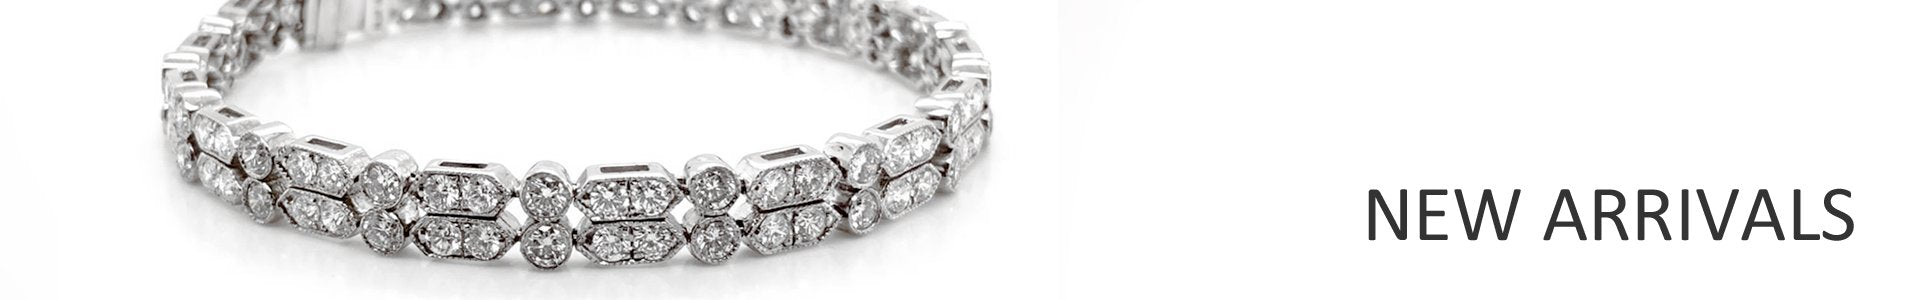 New Arrivals - Platinum Diamond Jewelry